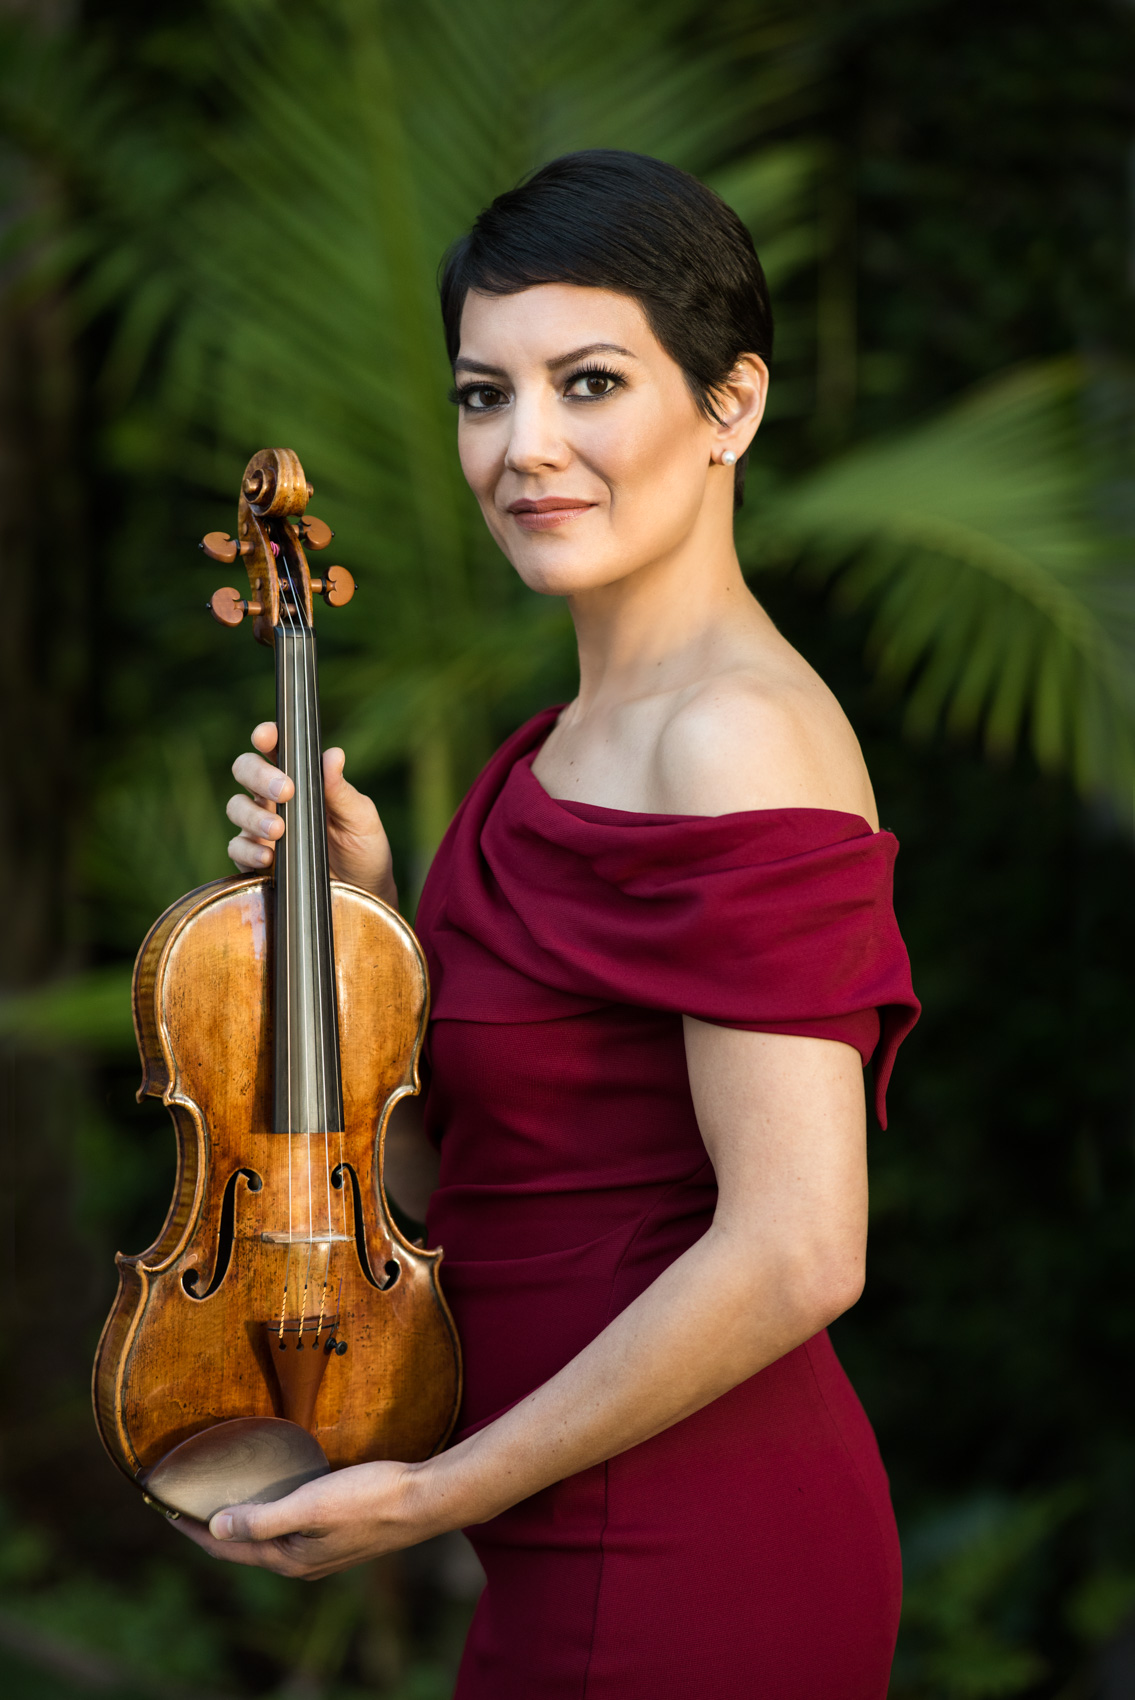 Portrait Photographer in Los Angeles David Zentz - Publicity portrait of violinist Anne Akiko Myers in Los Angeles.